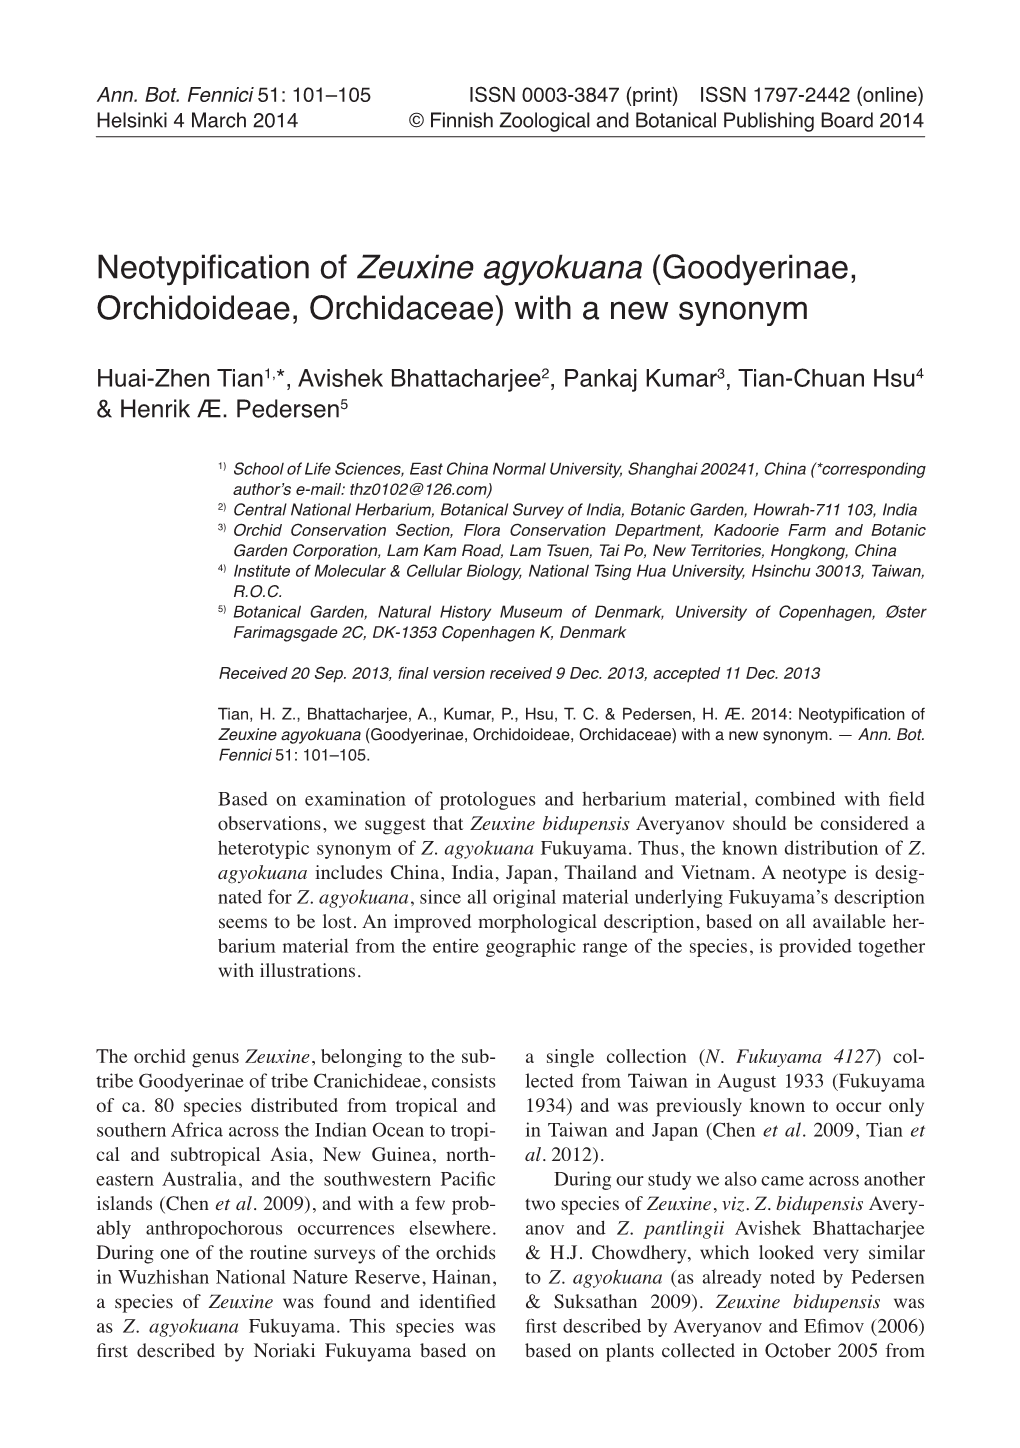 Neotypification of Zeuxine Agyokuana (Goodyerinae, Orchidoideae, Orchidaceae) with a New Synonym